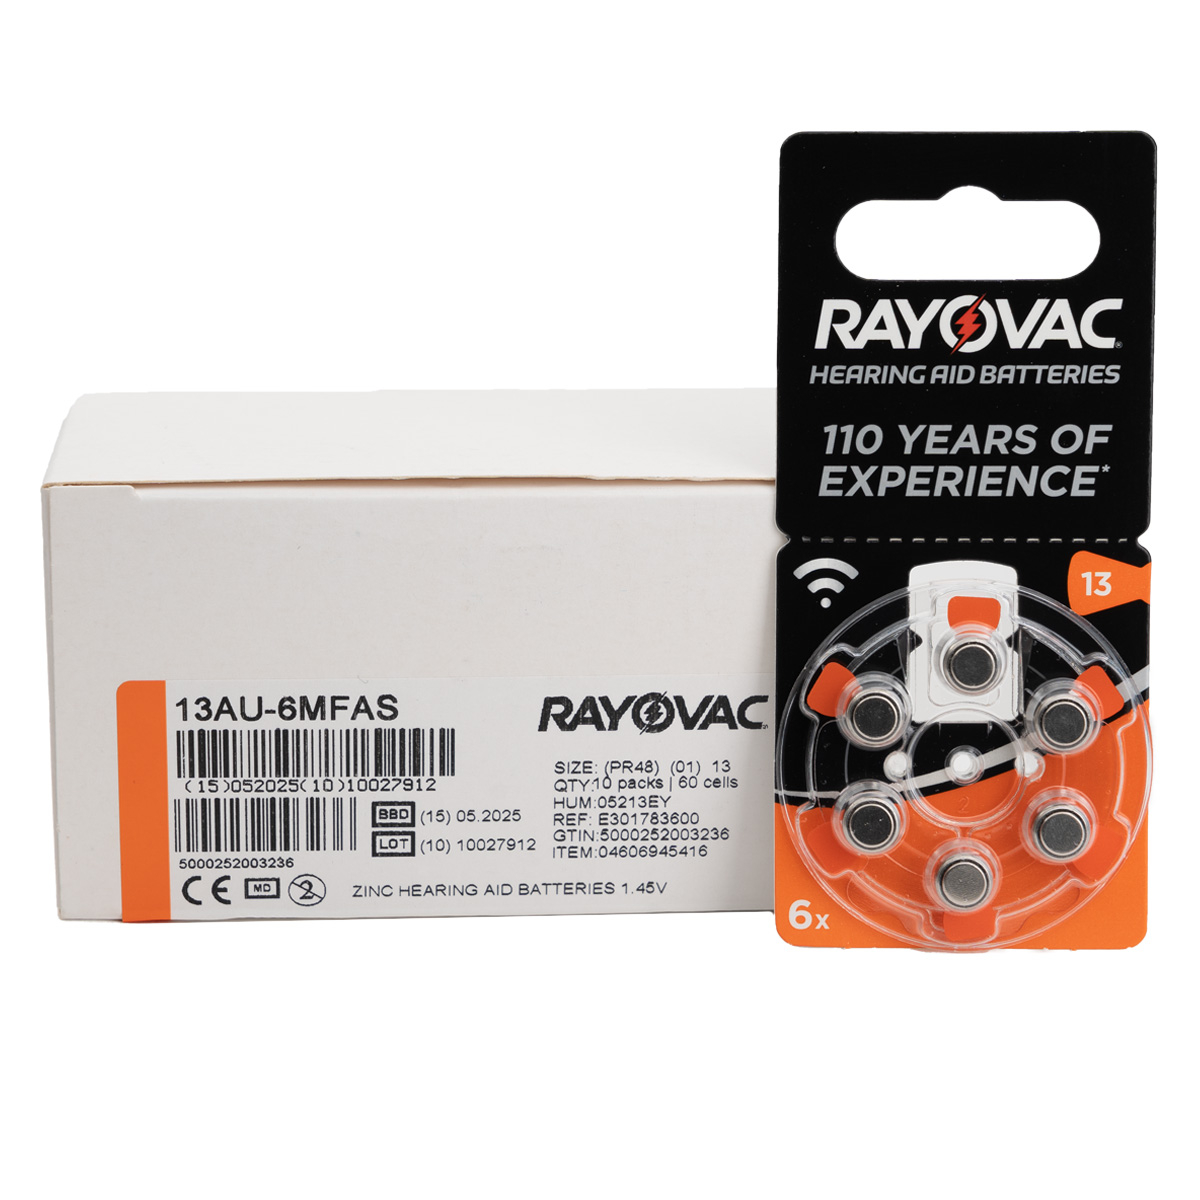 150 x Hörgeräte Batterien Typ 13 Acoustic spezial Rayovac 